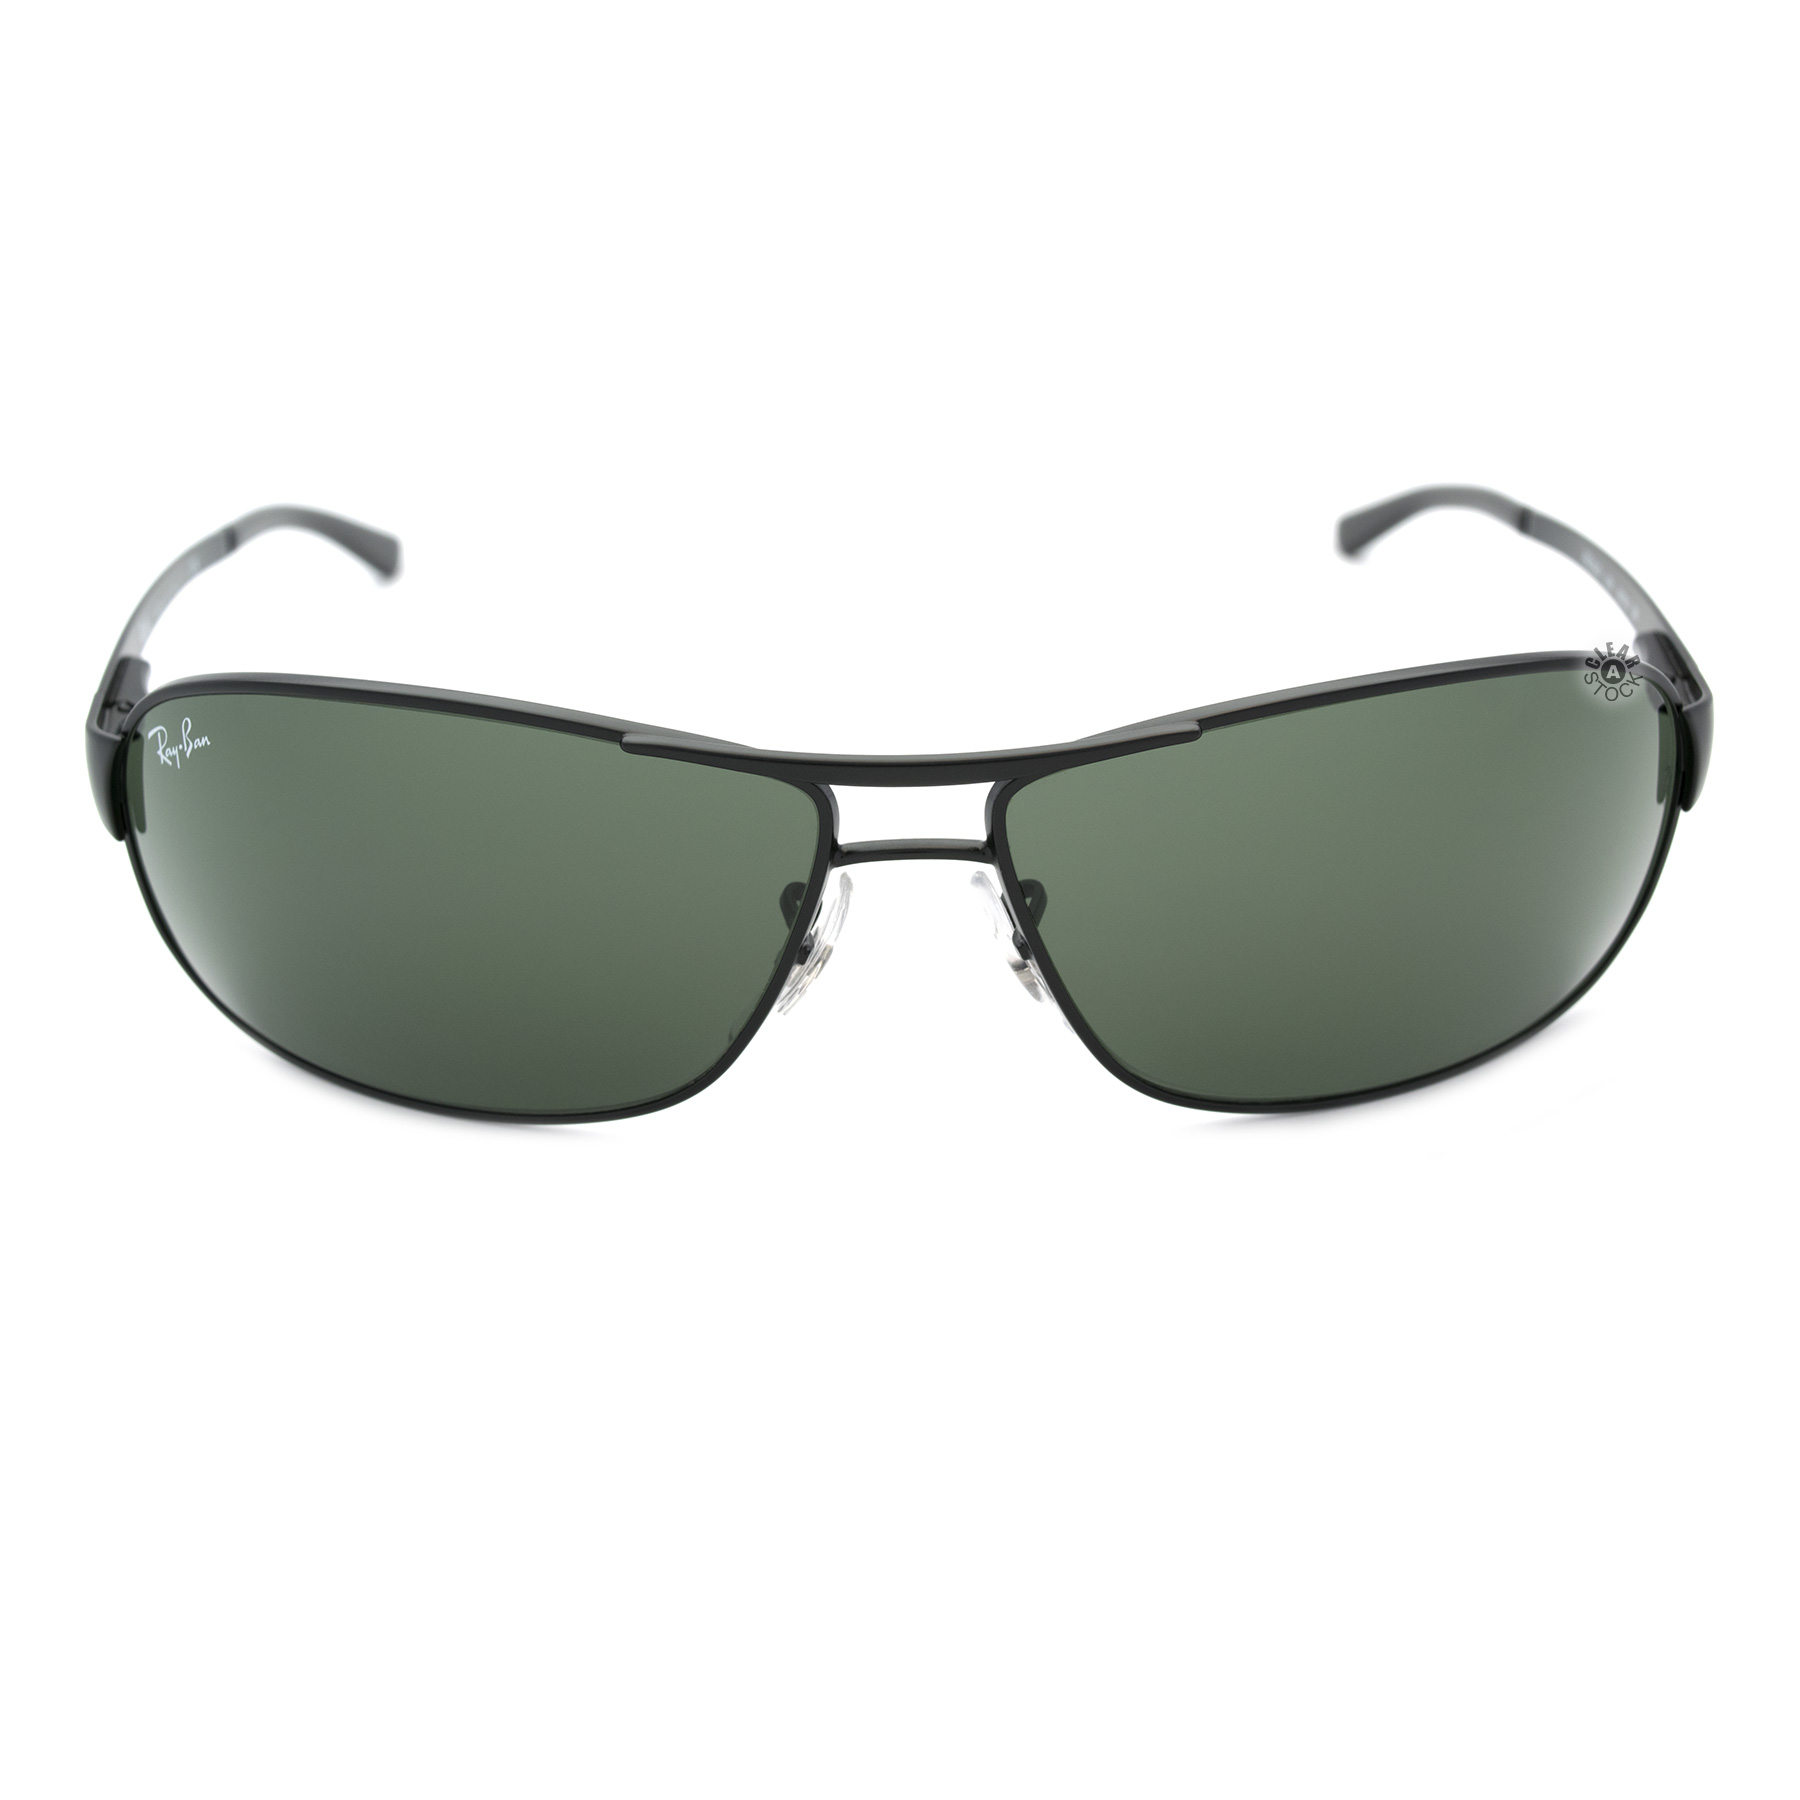 Ray-Ban RB3343 006 Sunglasses Matte Black/Green 60mm